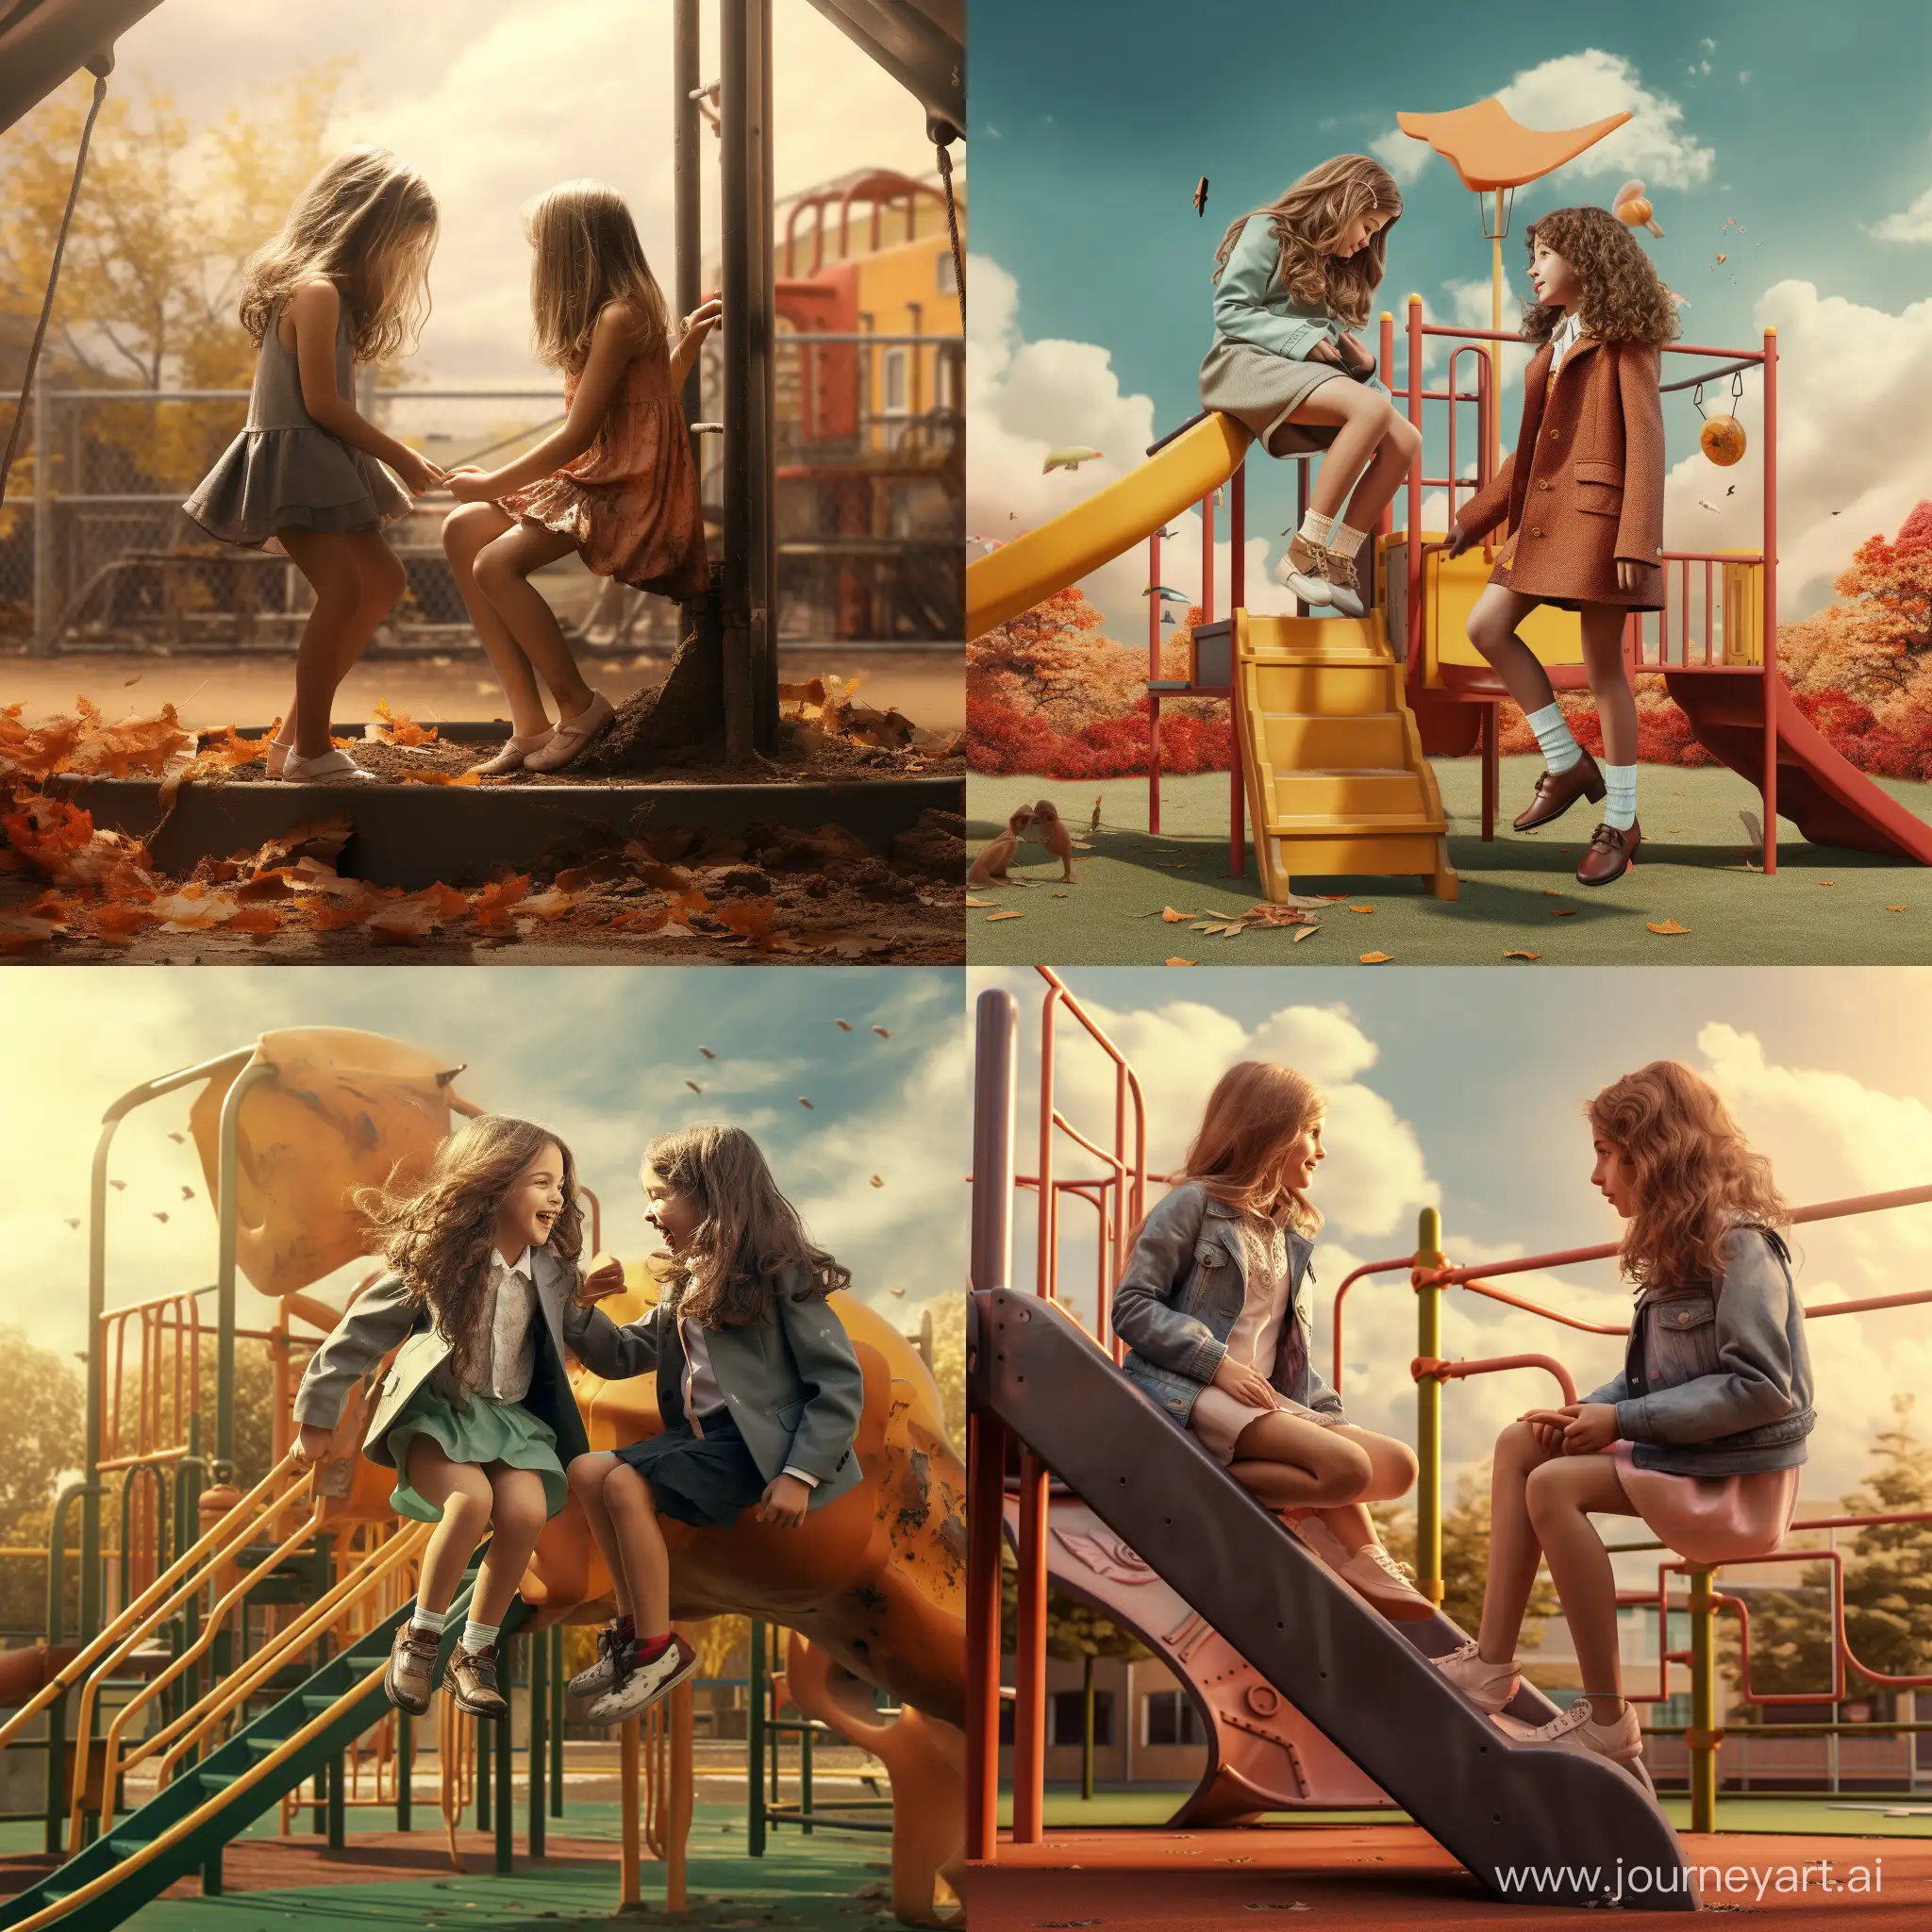 Joyful-Playtime-Two-Girls-Having-Fun-in-a-Colorful-Playground